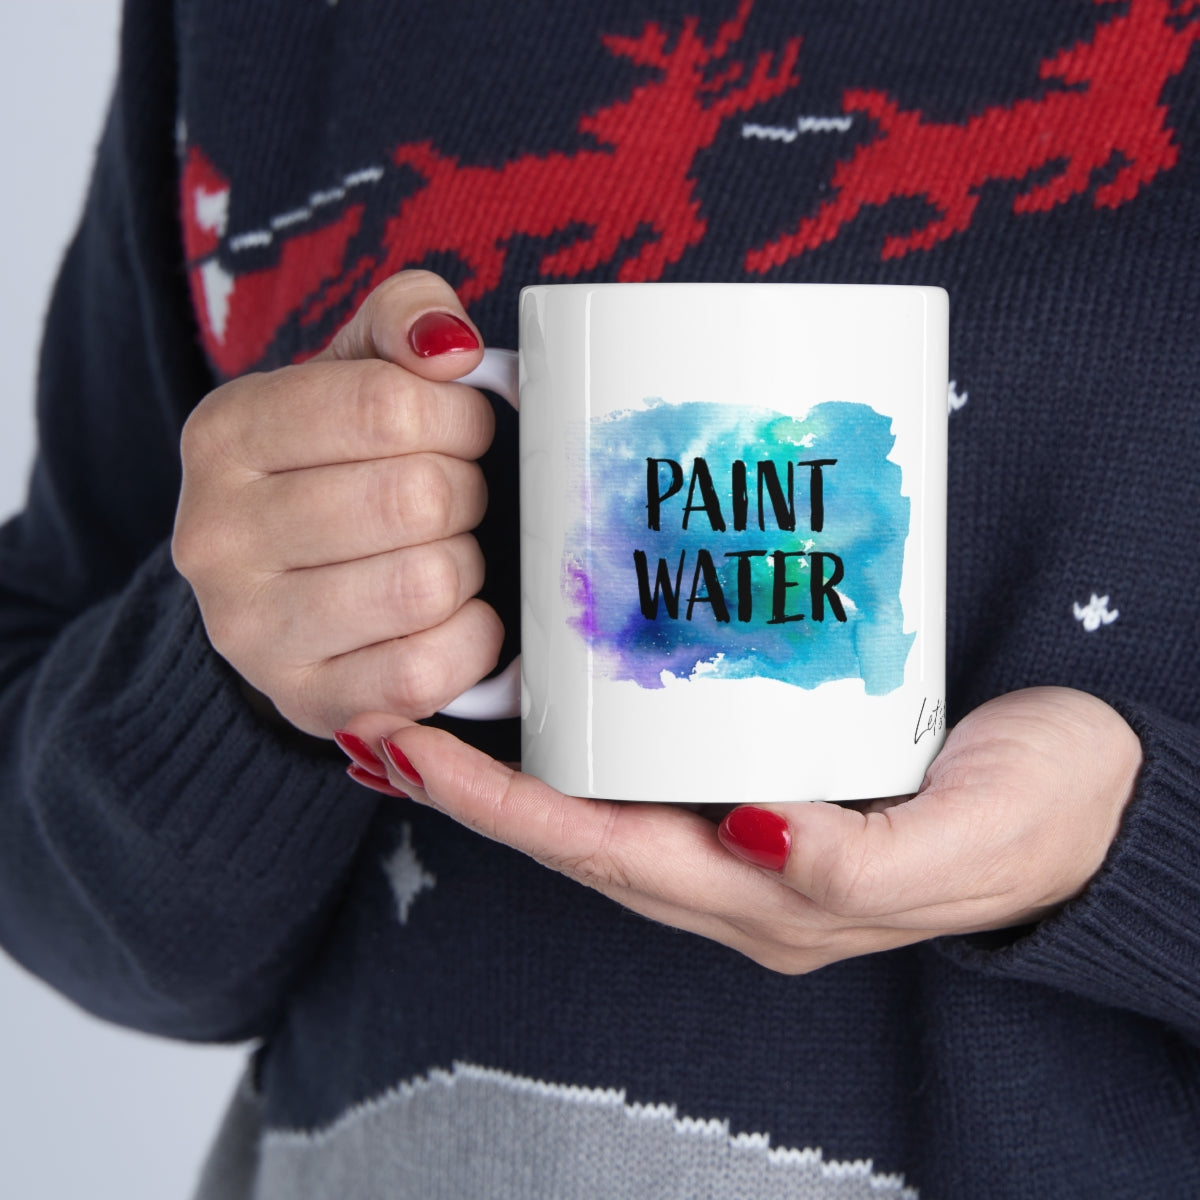 Paint Water Ceramic Mug 11oz